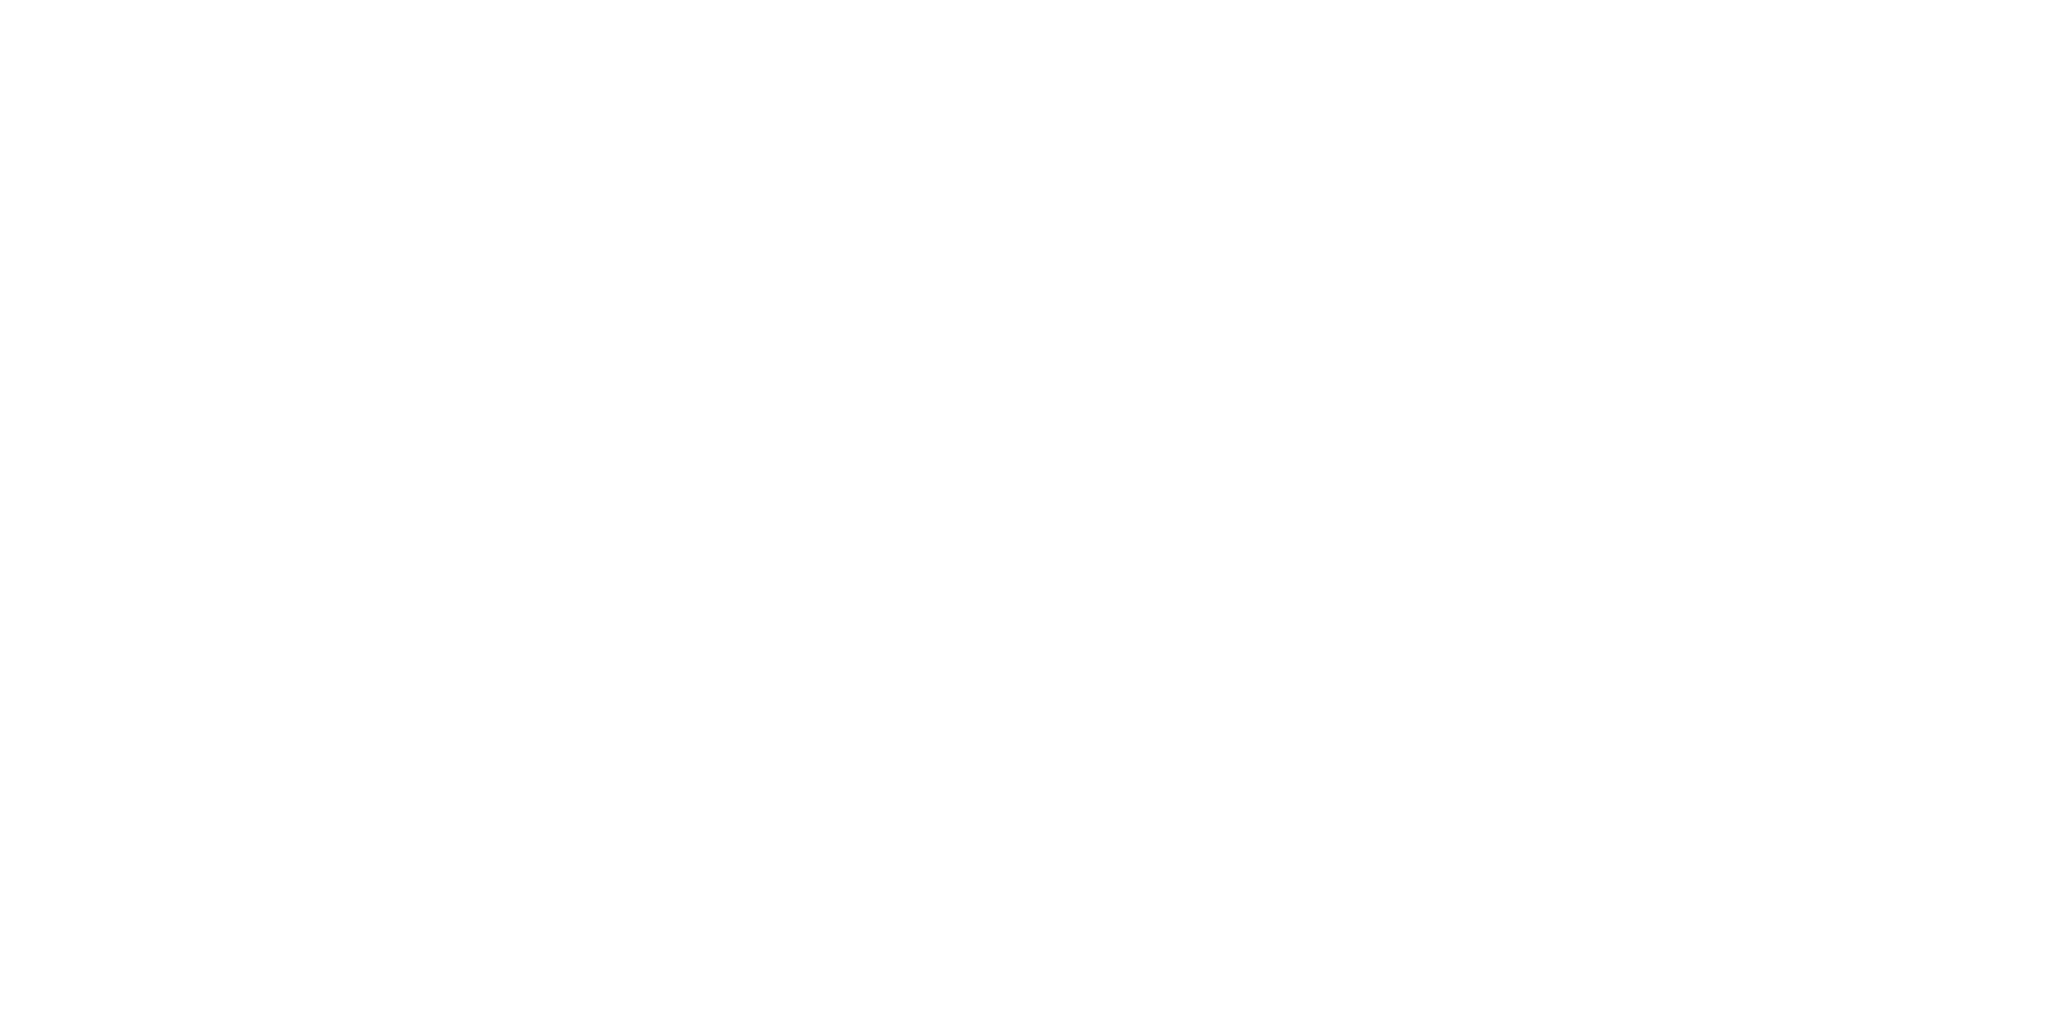 Media Scope Group logo